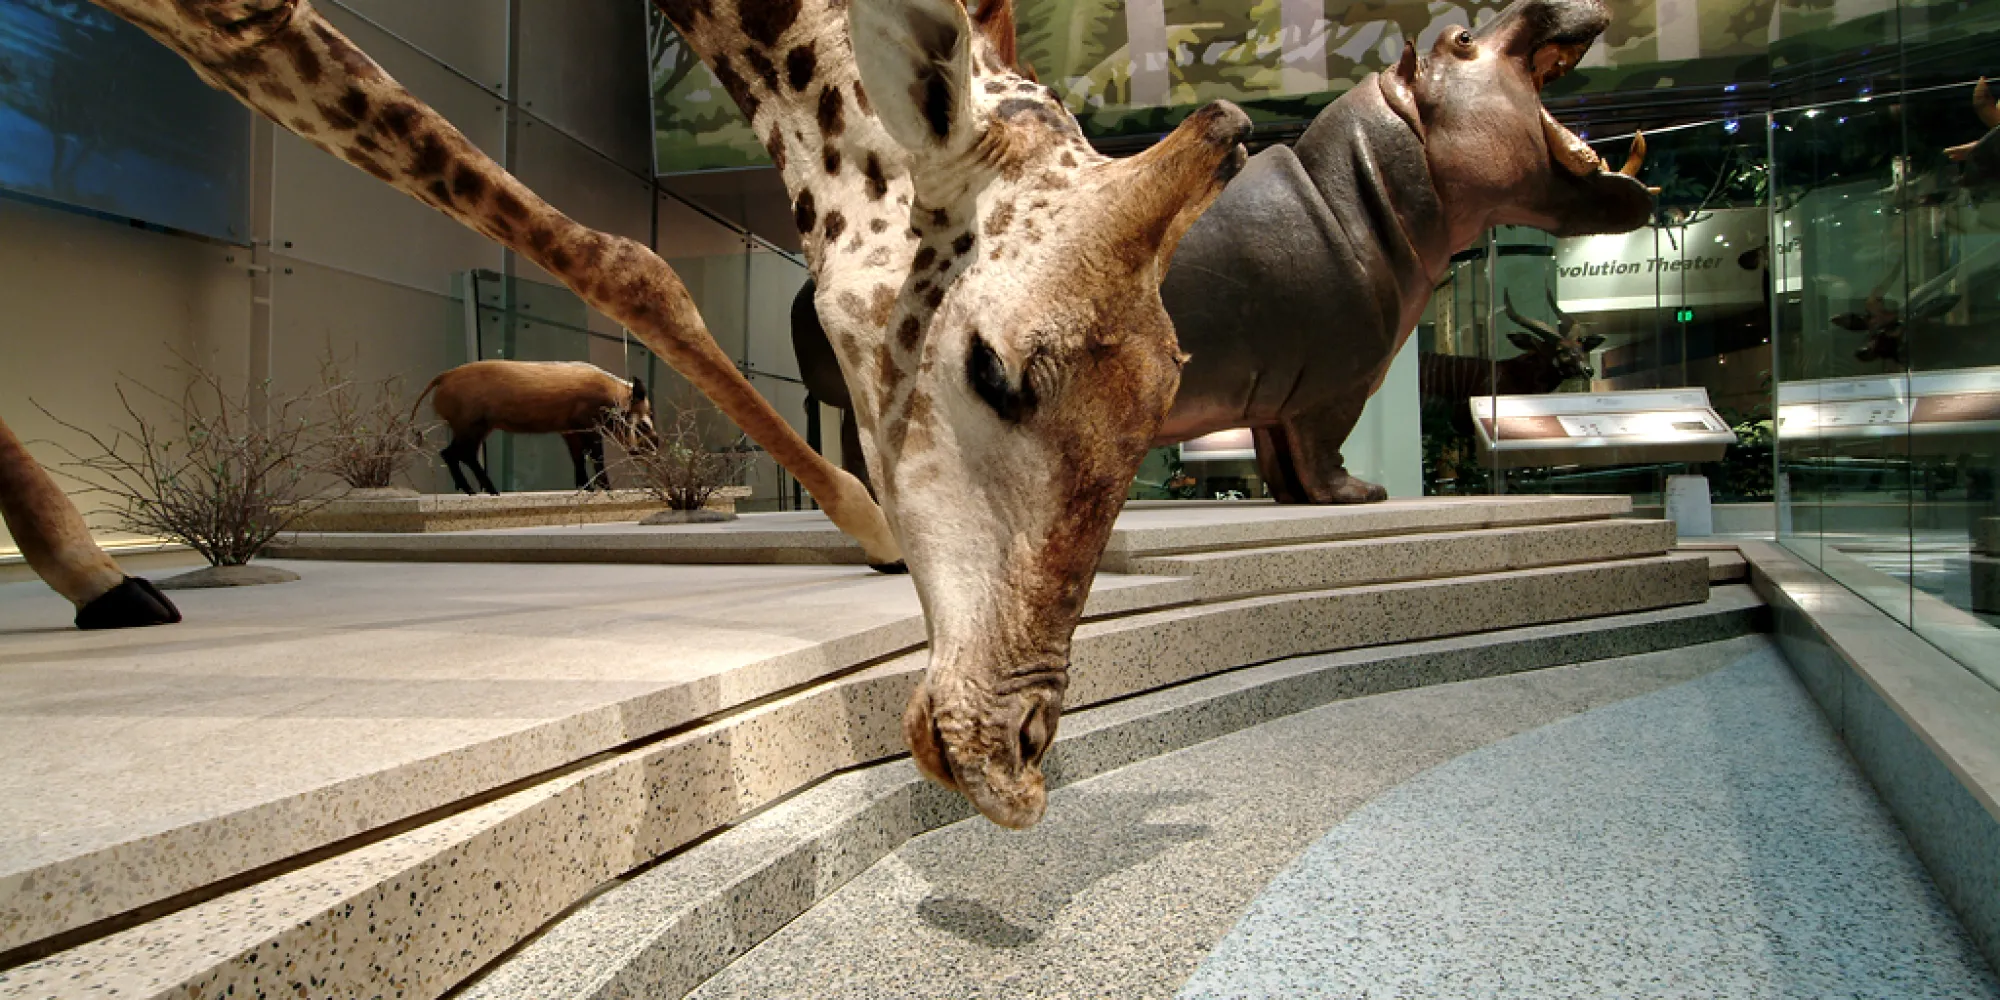 taxidermy Giraffe drinking water in exhibit hall